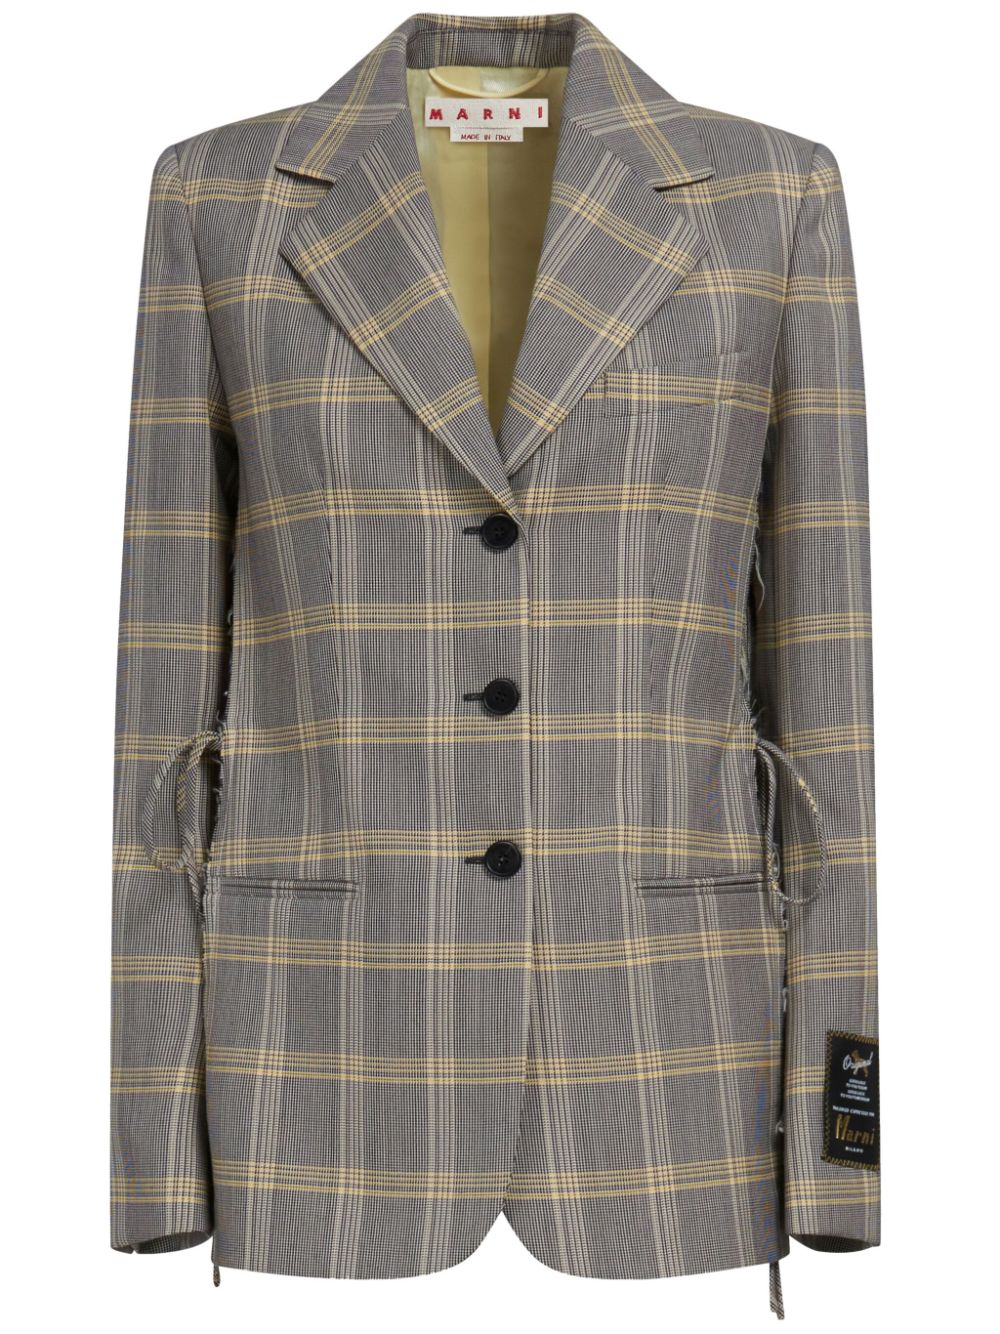 MARNI CHY20 Women's SS24 Wool-Blend Jacket